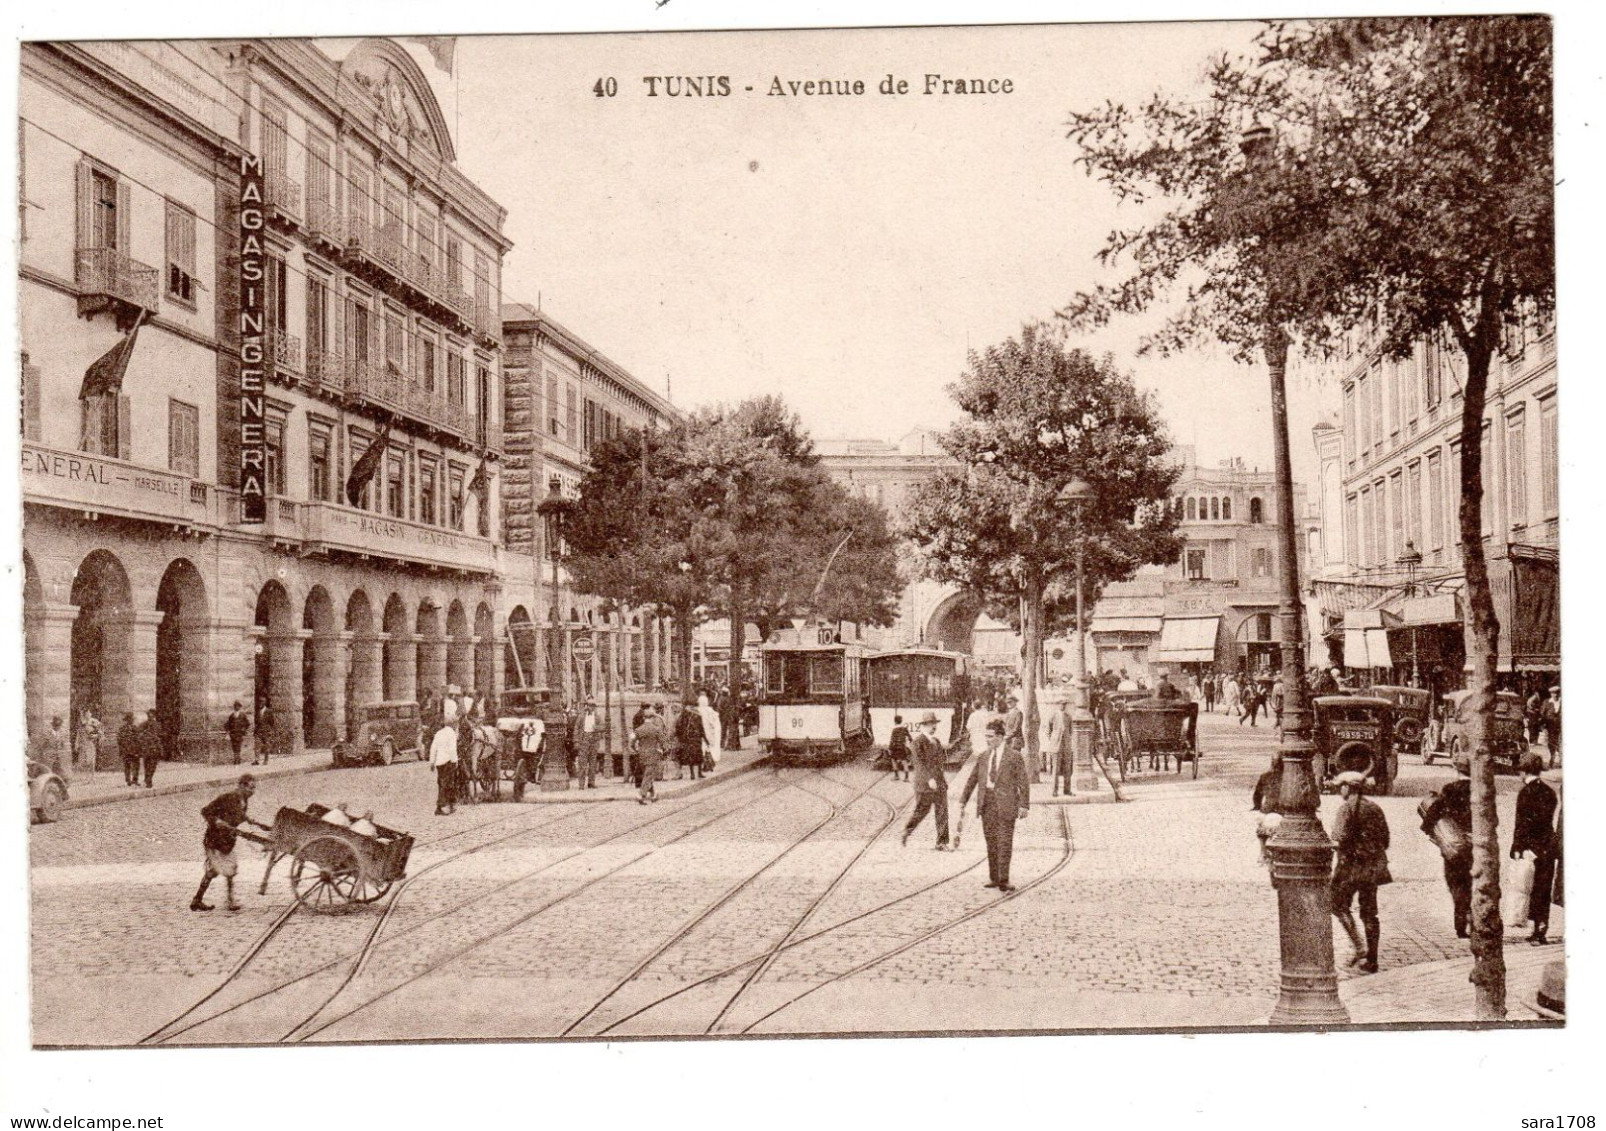 TUNIS, Avenue De France. - Tunisia